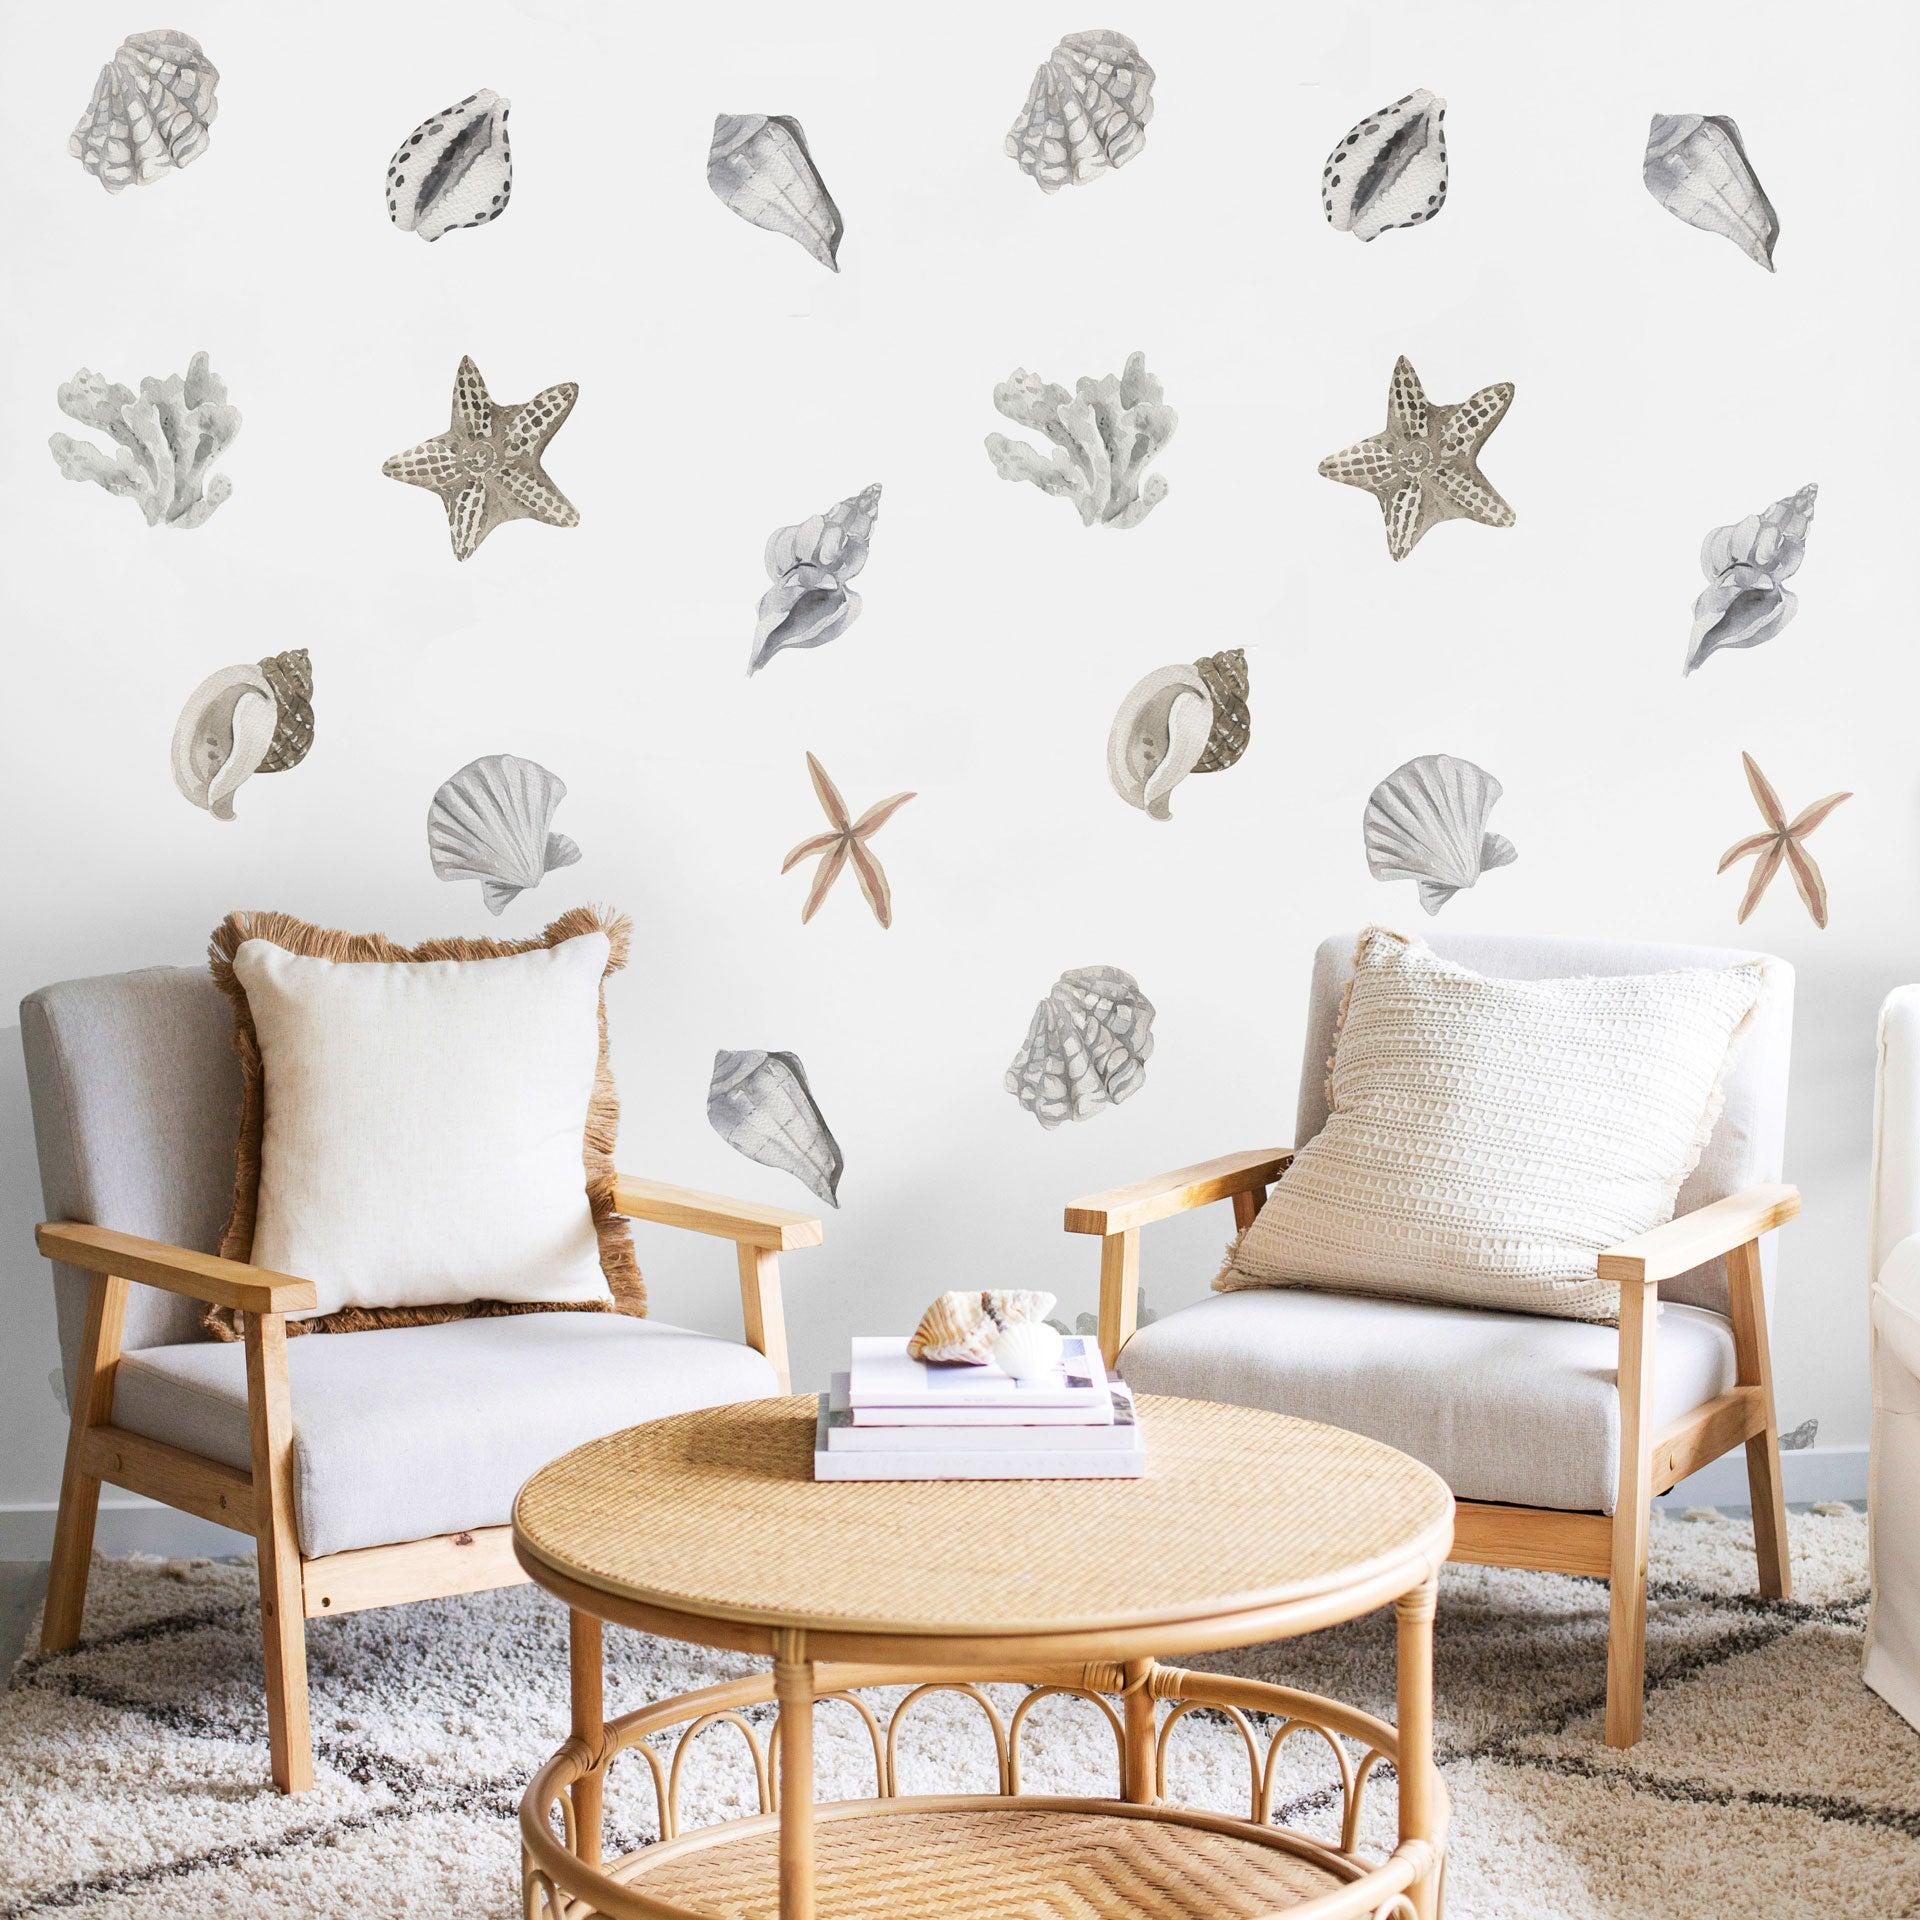 Nautilus Wallpaper by Wall Blush SG02 in a stylish living room, coastal theme focus.
